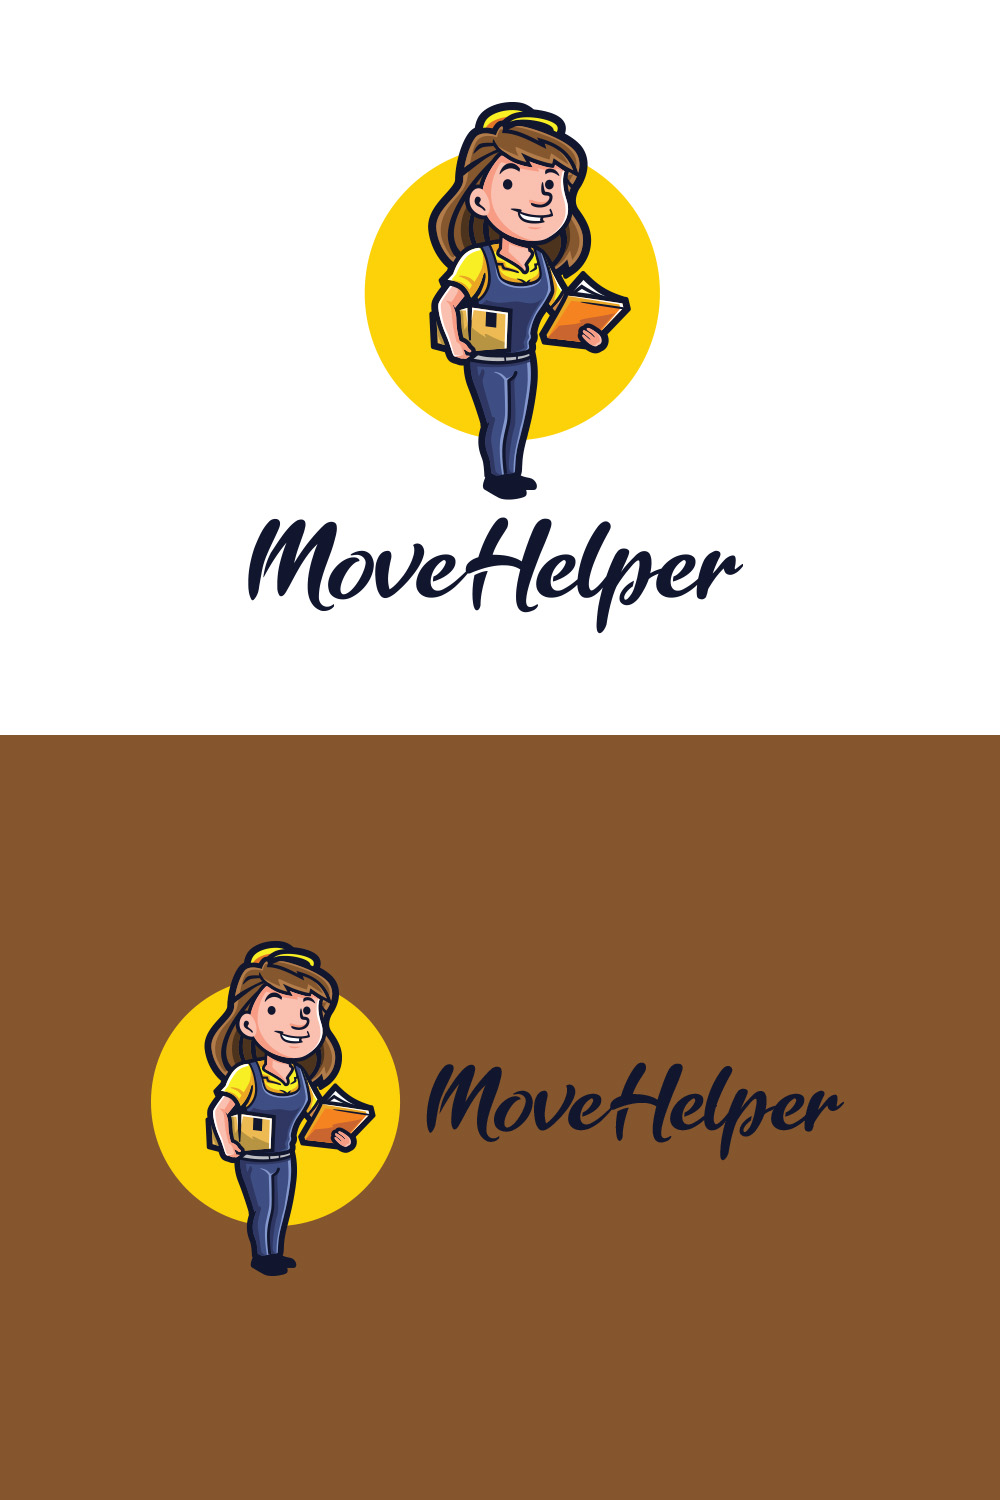 Moverhelper Character Logo Design cover image.